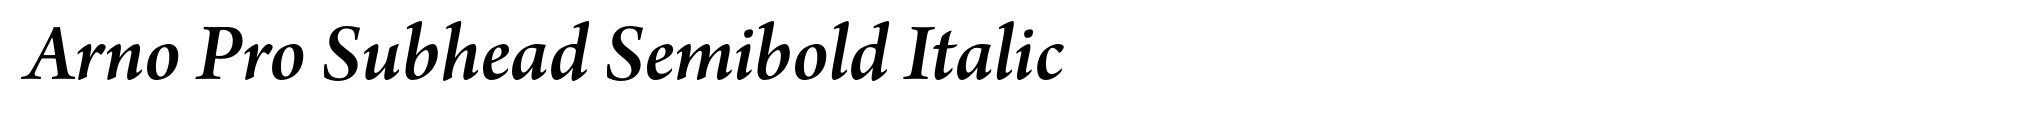 Arno Pro Subhead Semibold Italic image